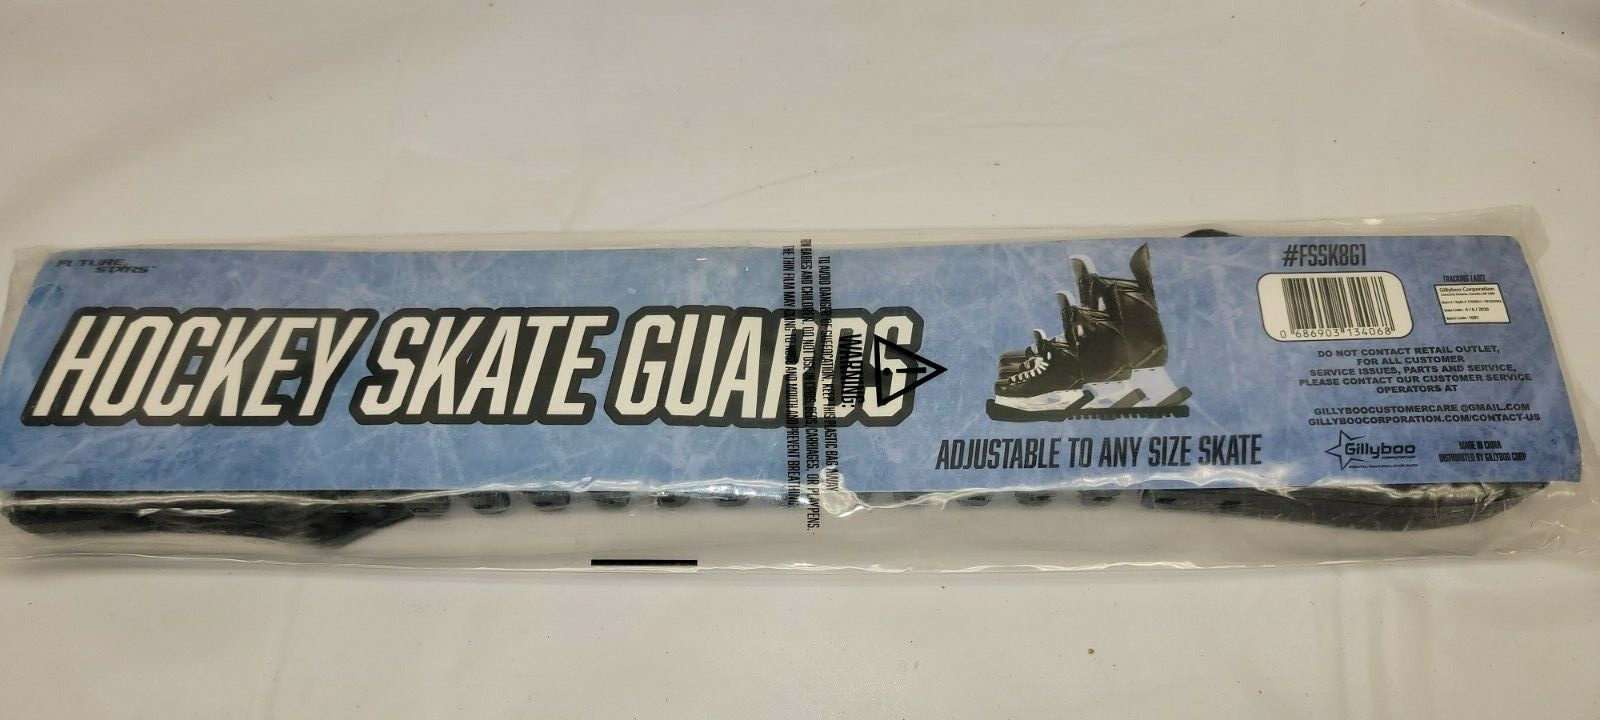 Hockey Skate Guards Black Adjustable To Any Size